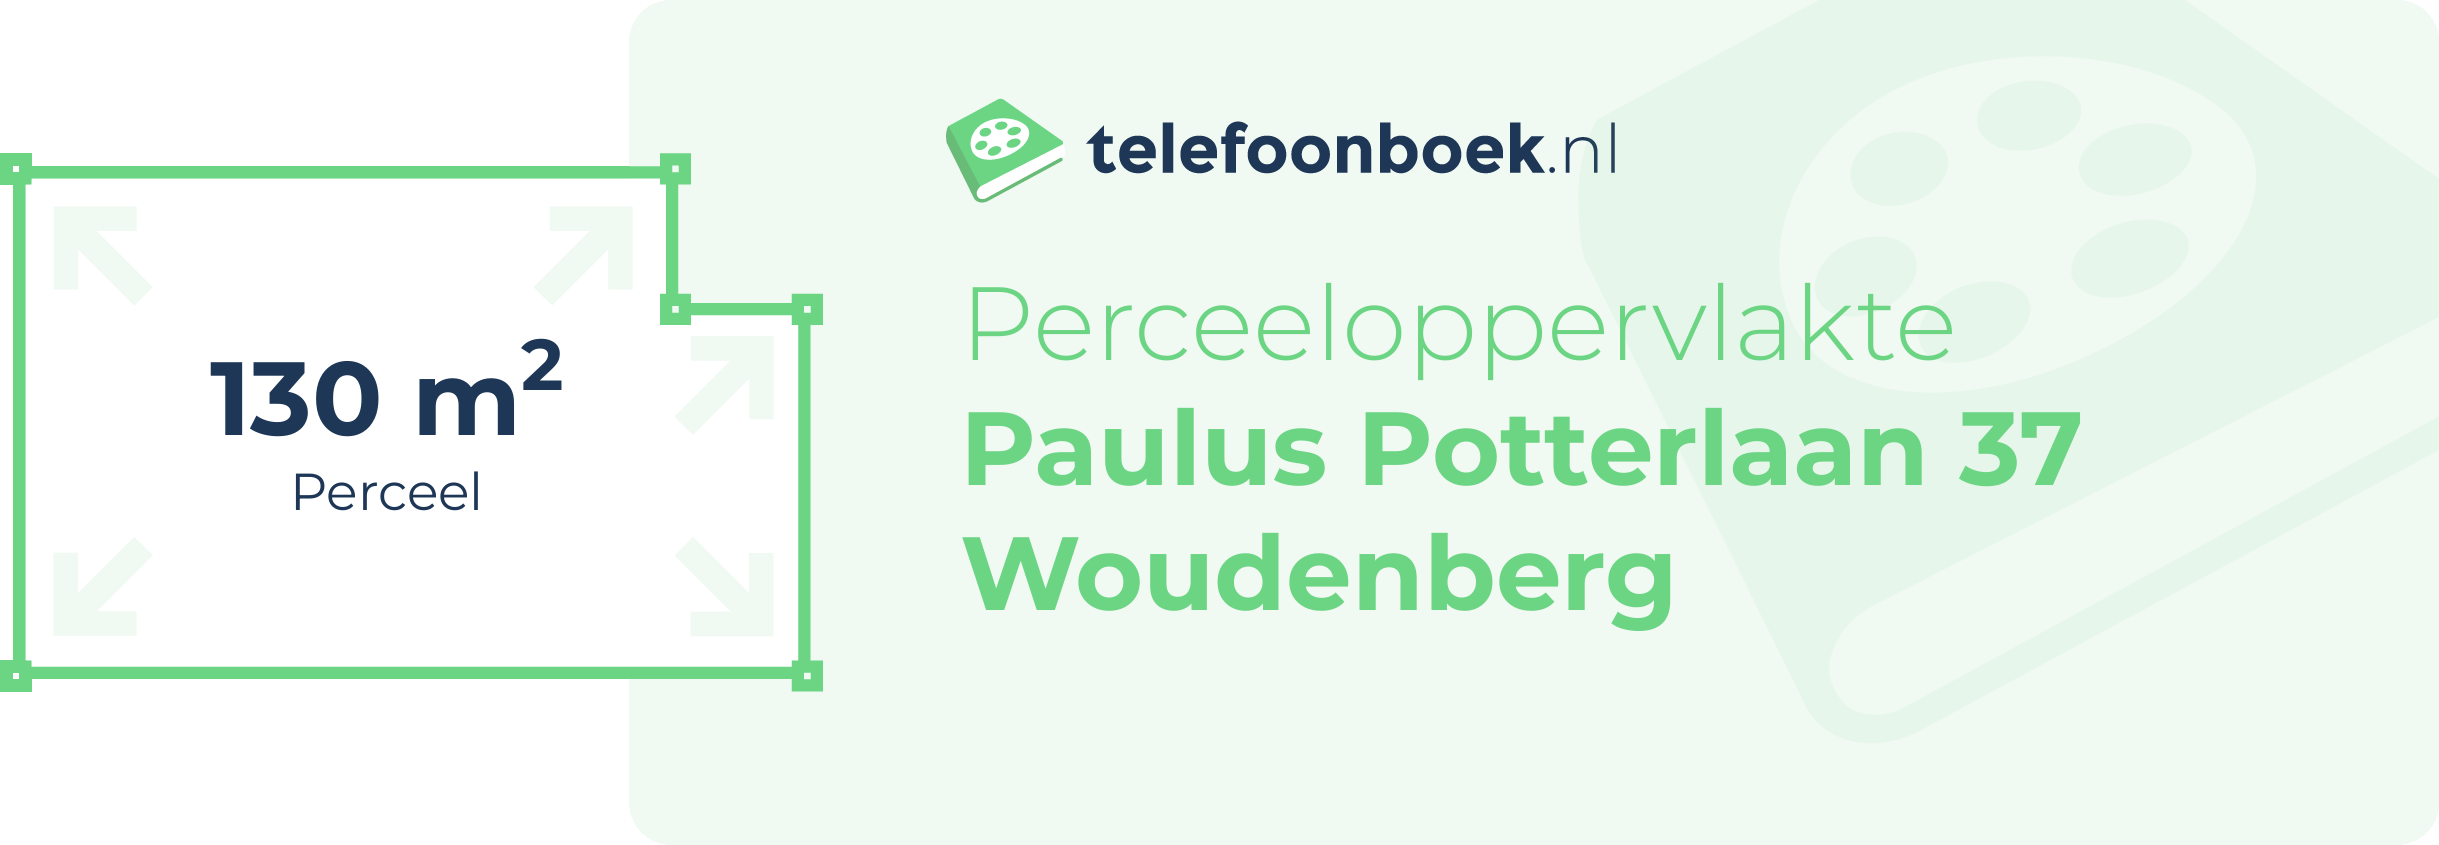 Perceeloppervlakte Paulus Potterlaan 37 Woudenberg